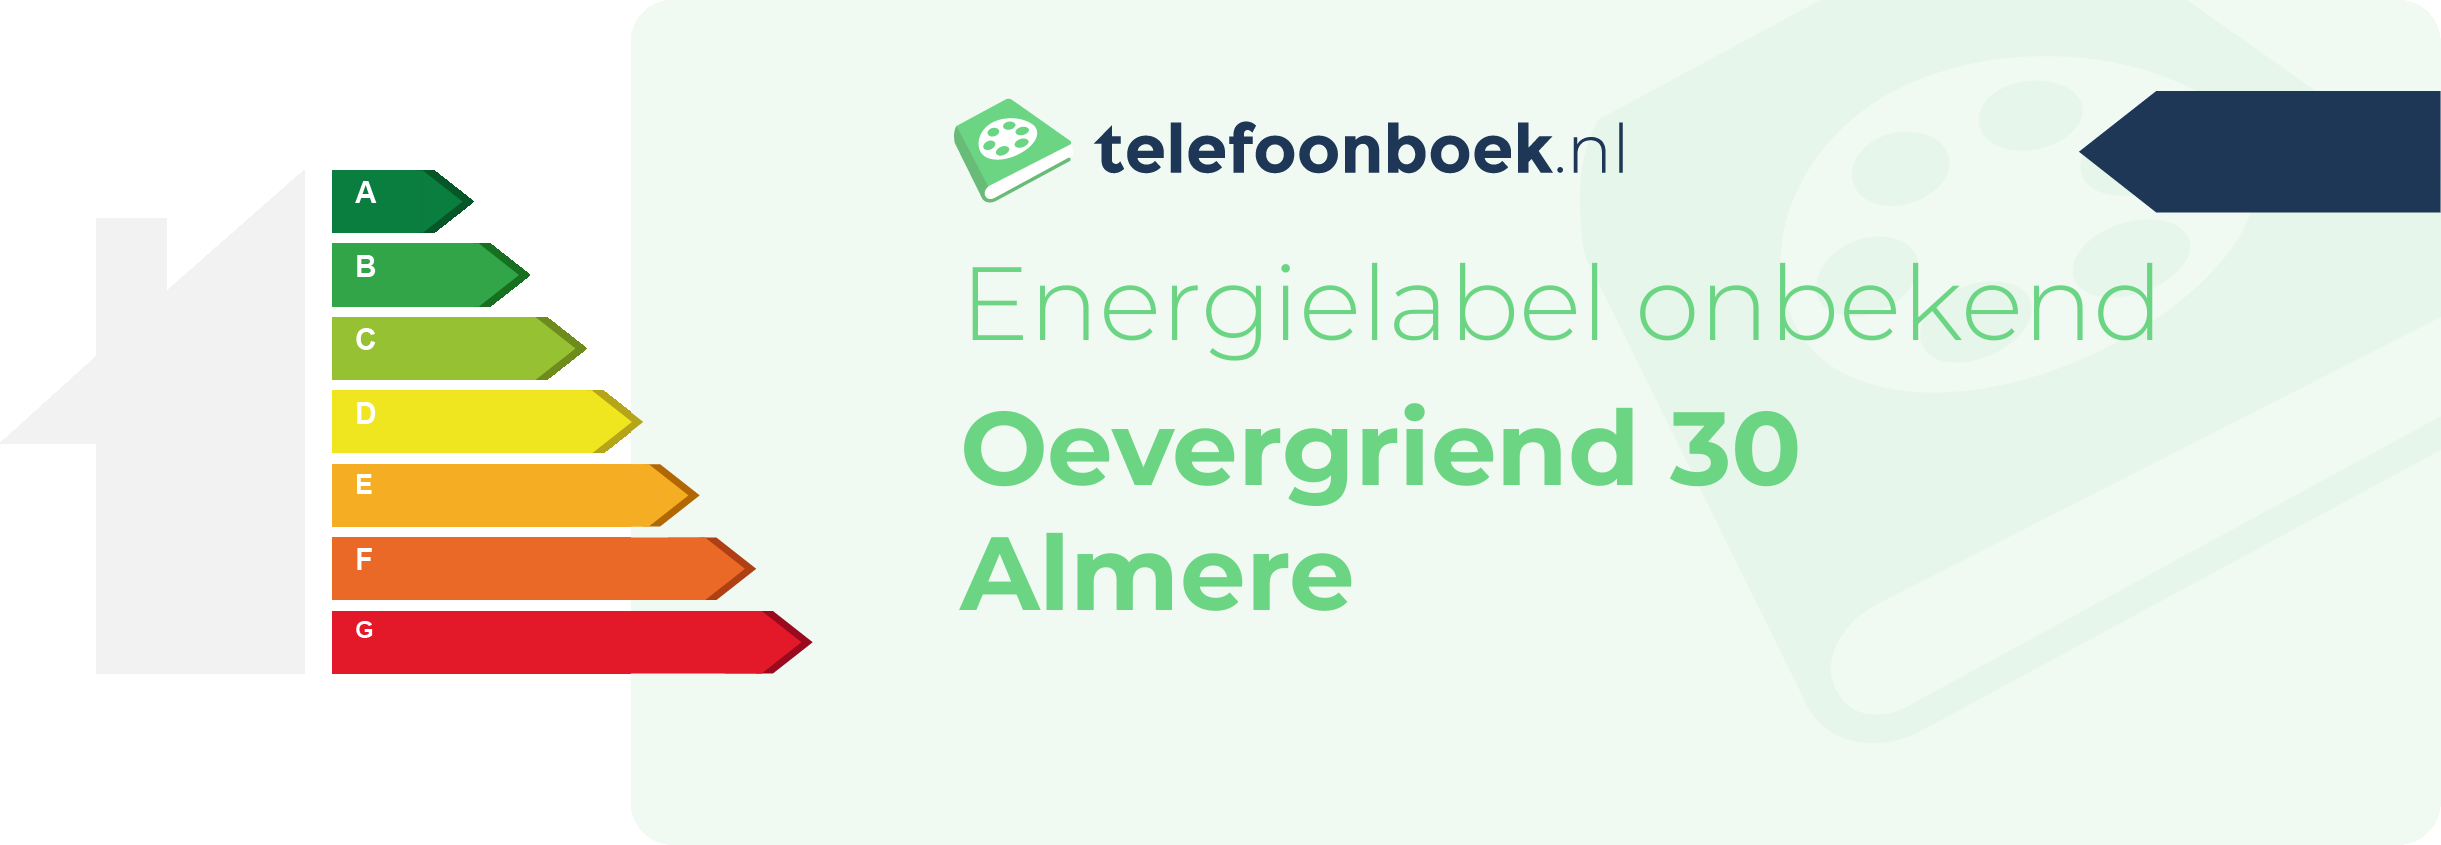 Energielabel Oevergriend 30 Almere